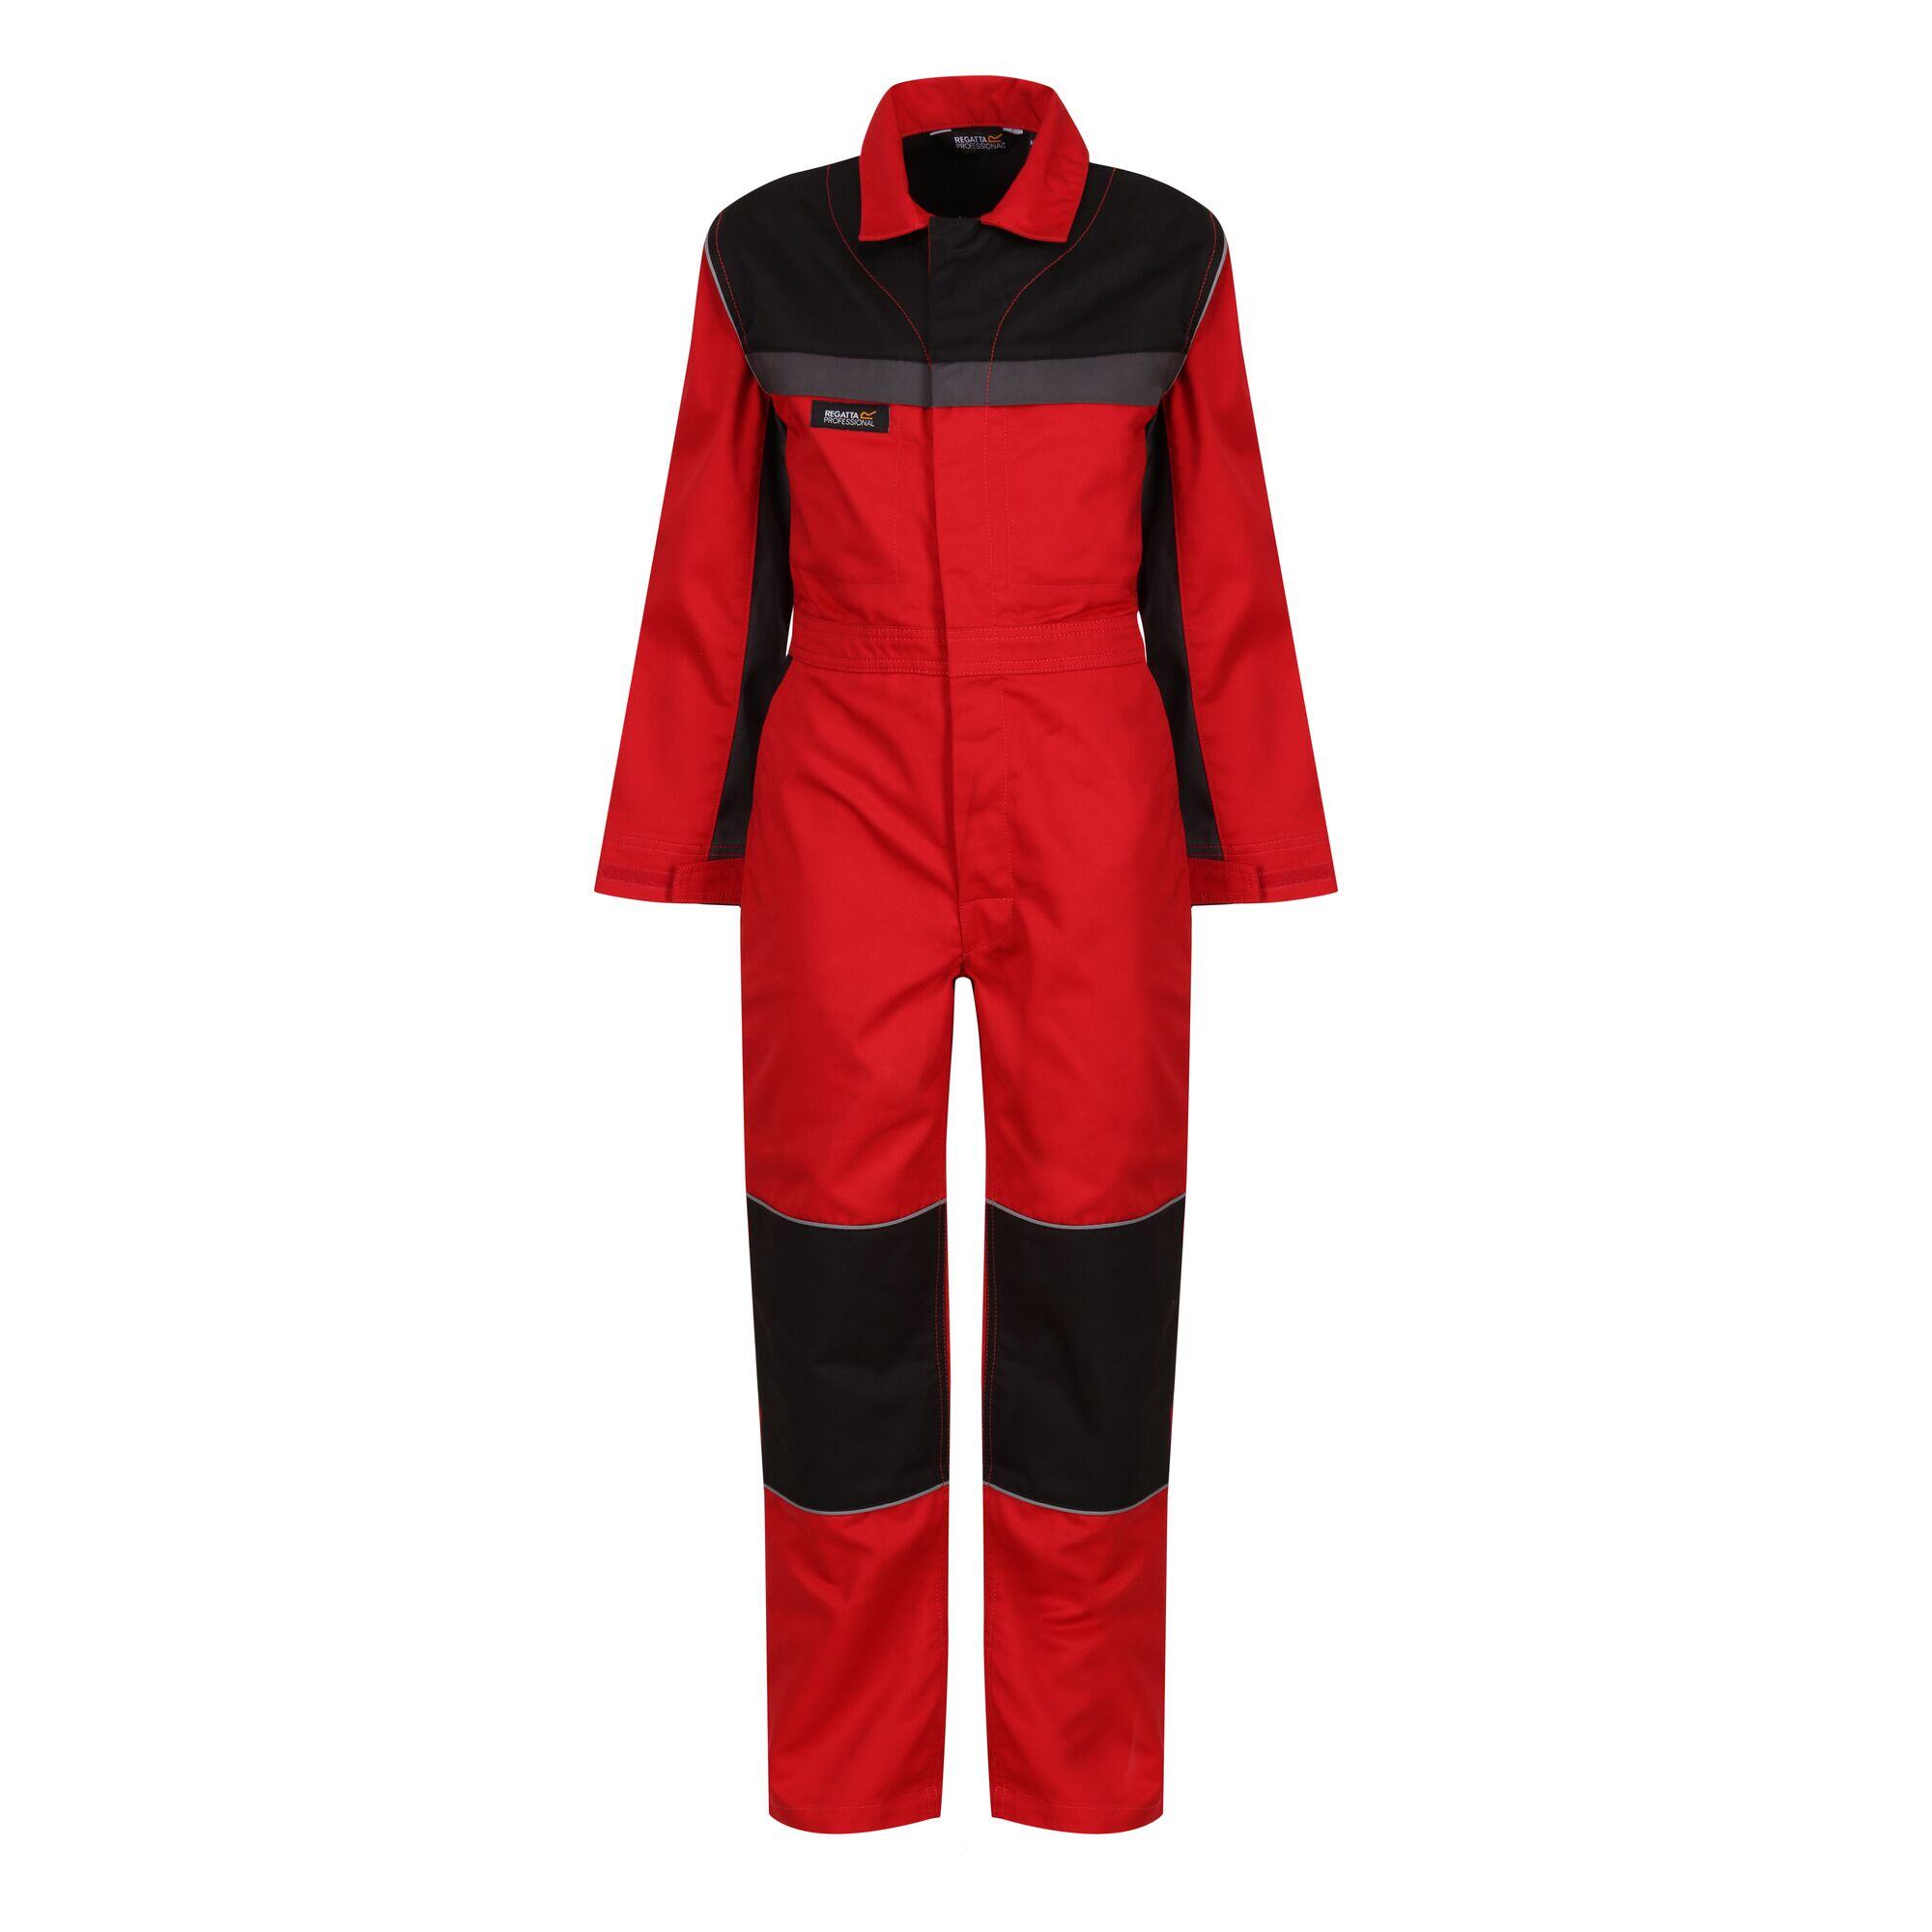 Childrens/Kids Contrast Snap Fit Jumpsuit (Classic Red/Black) 1/4